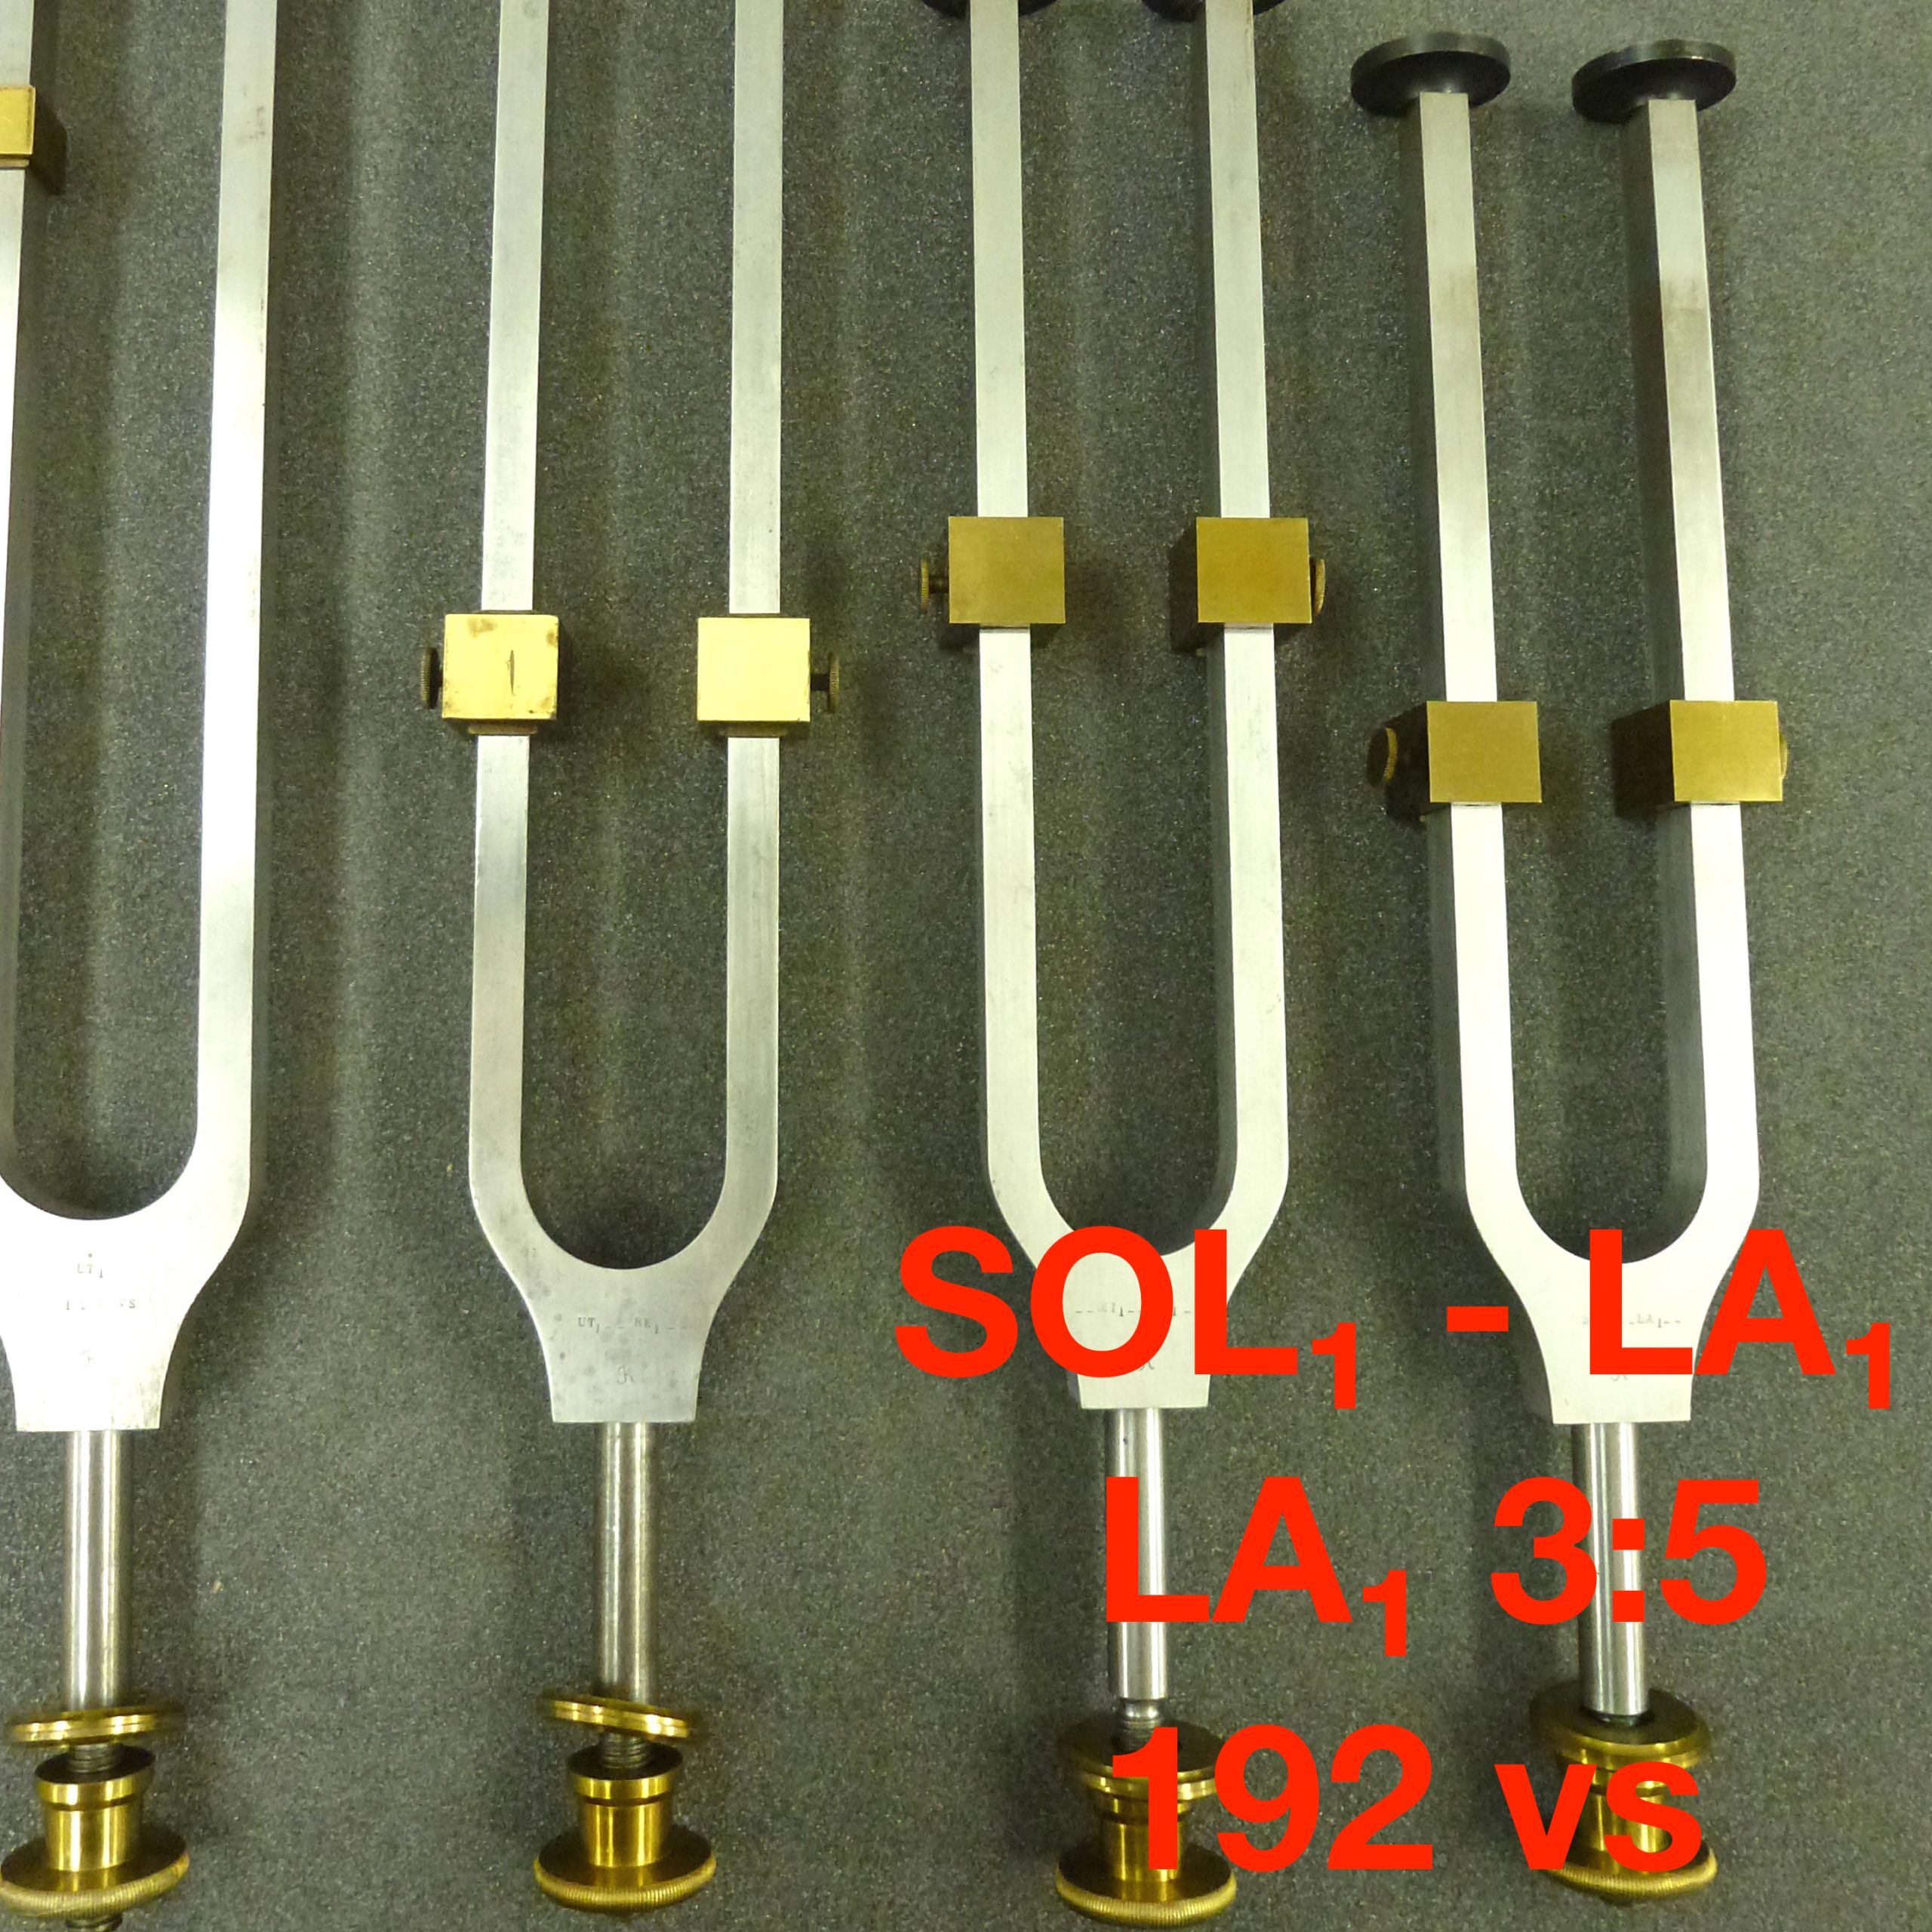 Tuning fork by Dr. R. König: SOL₁ - LA₁: LA₁ 3:5